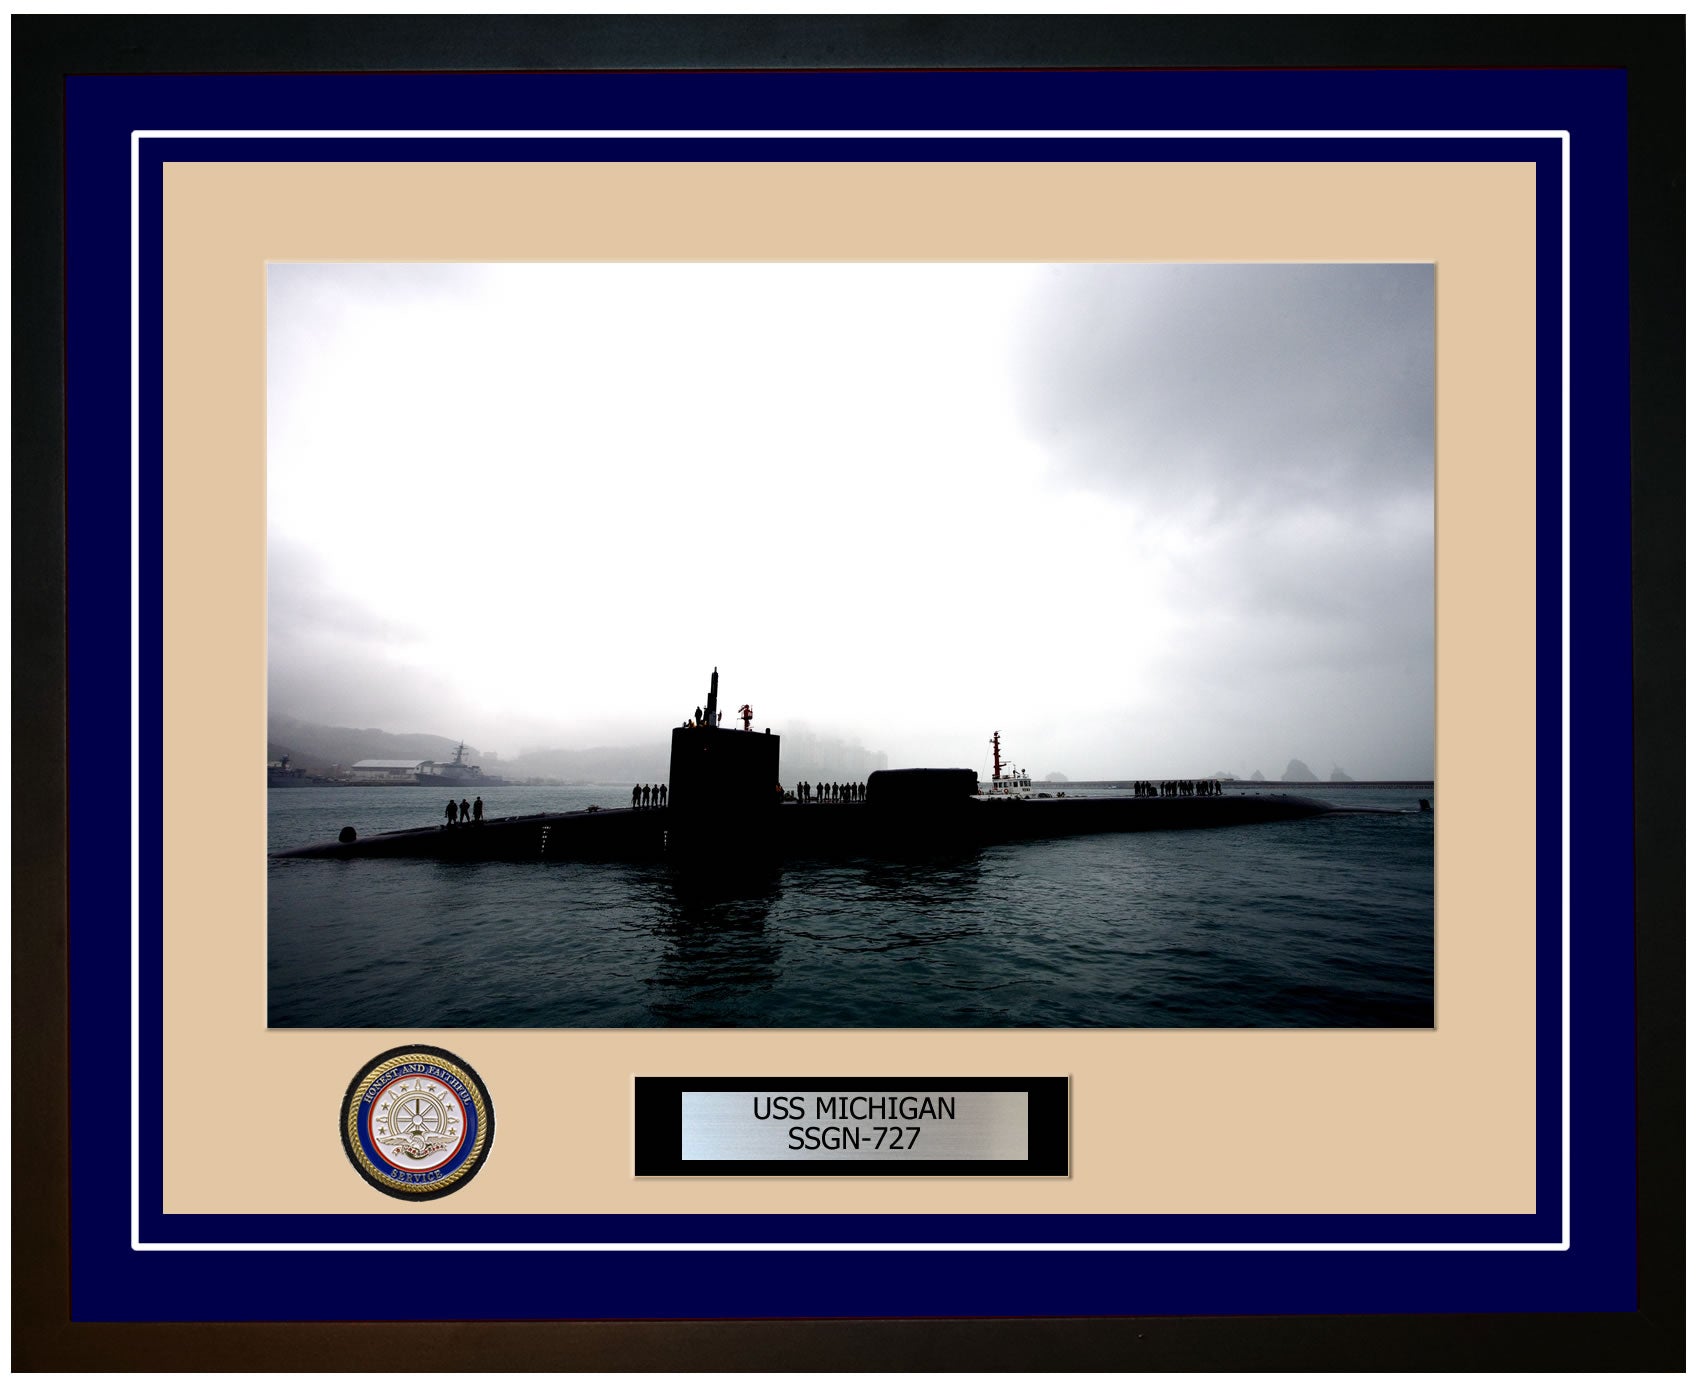 USS Michigan SSGN-727 Framed Navy Ship Photo Blue